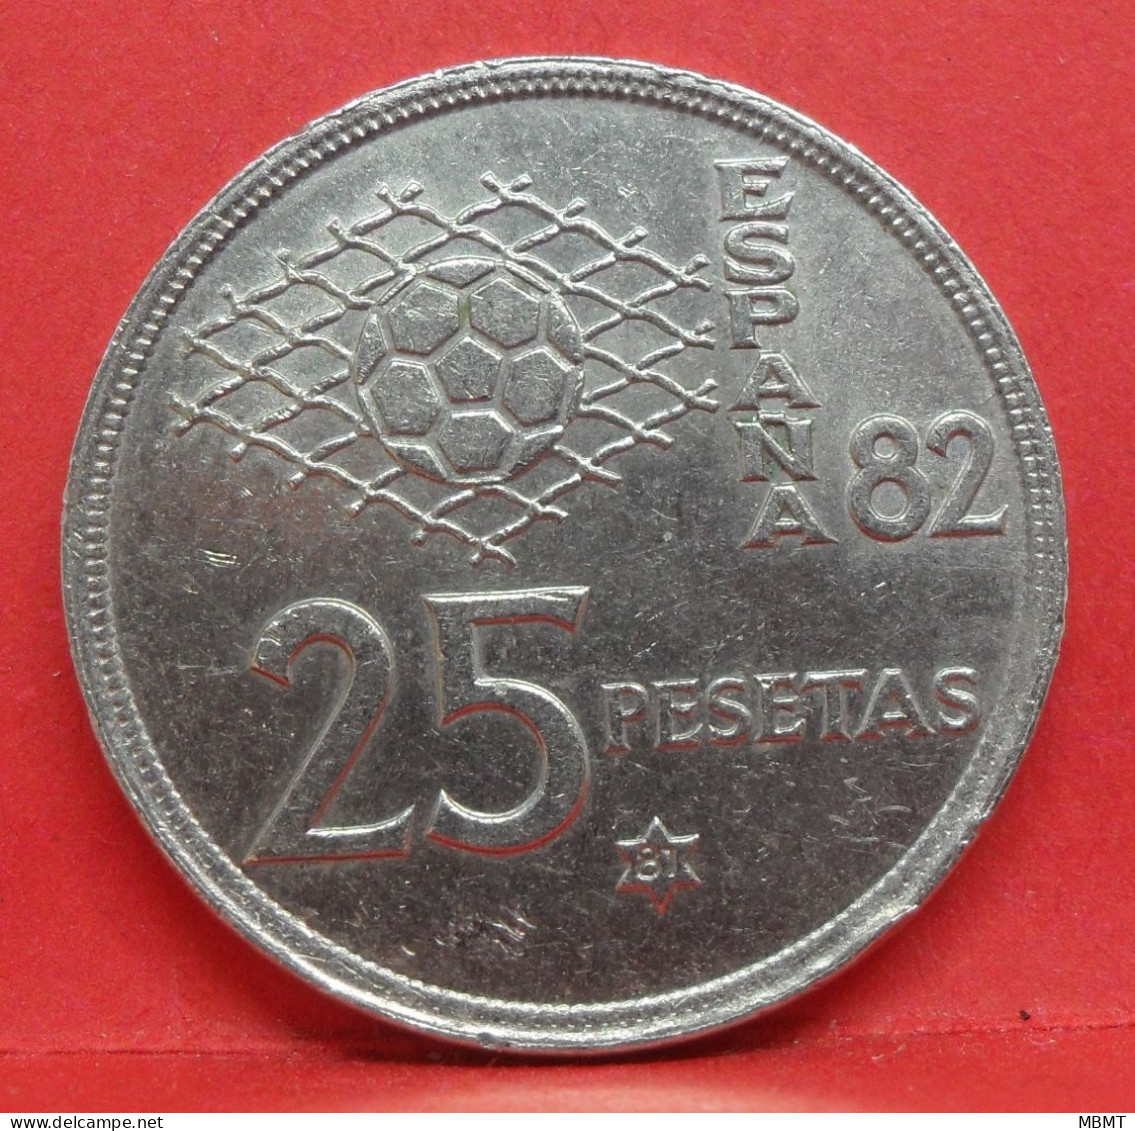 25 Pesetas 1980 étoile 81 - TTB - Pièce Monnaie Espagne - Article N°2455 - 25 Peseta